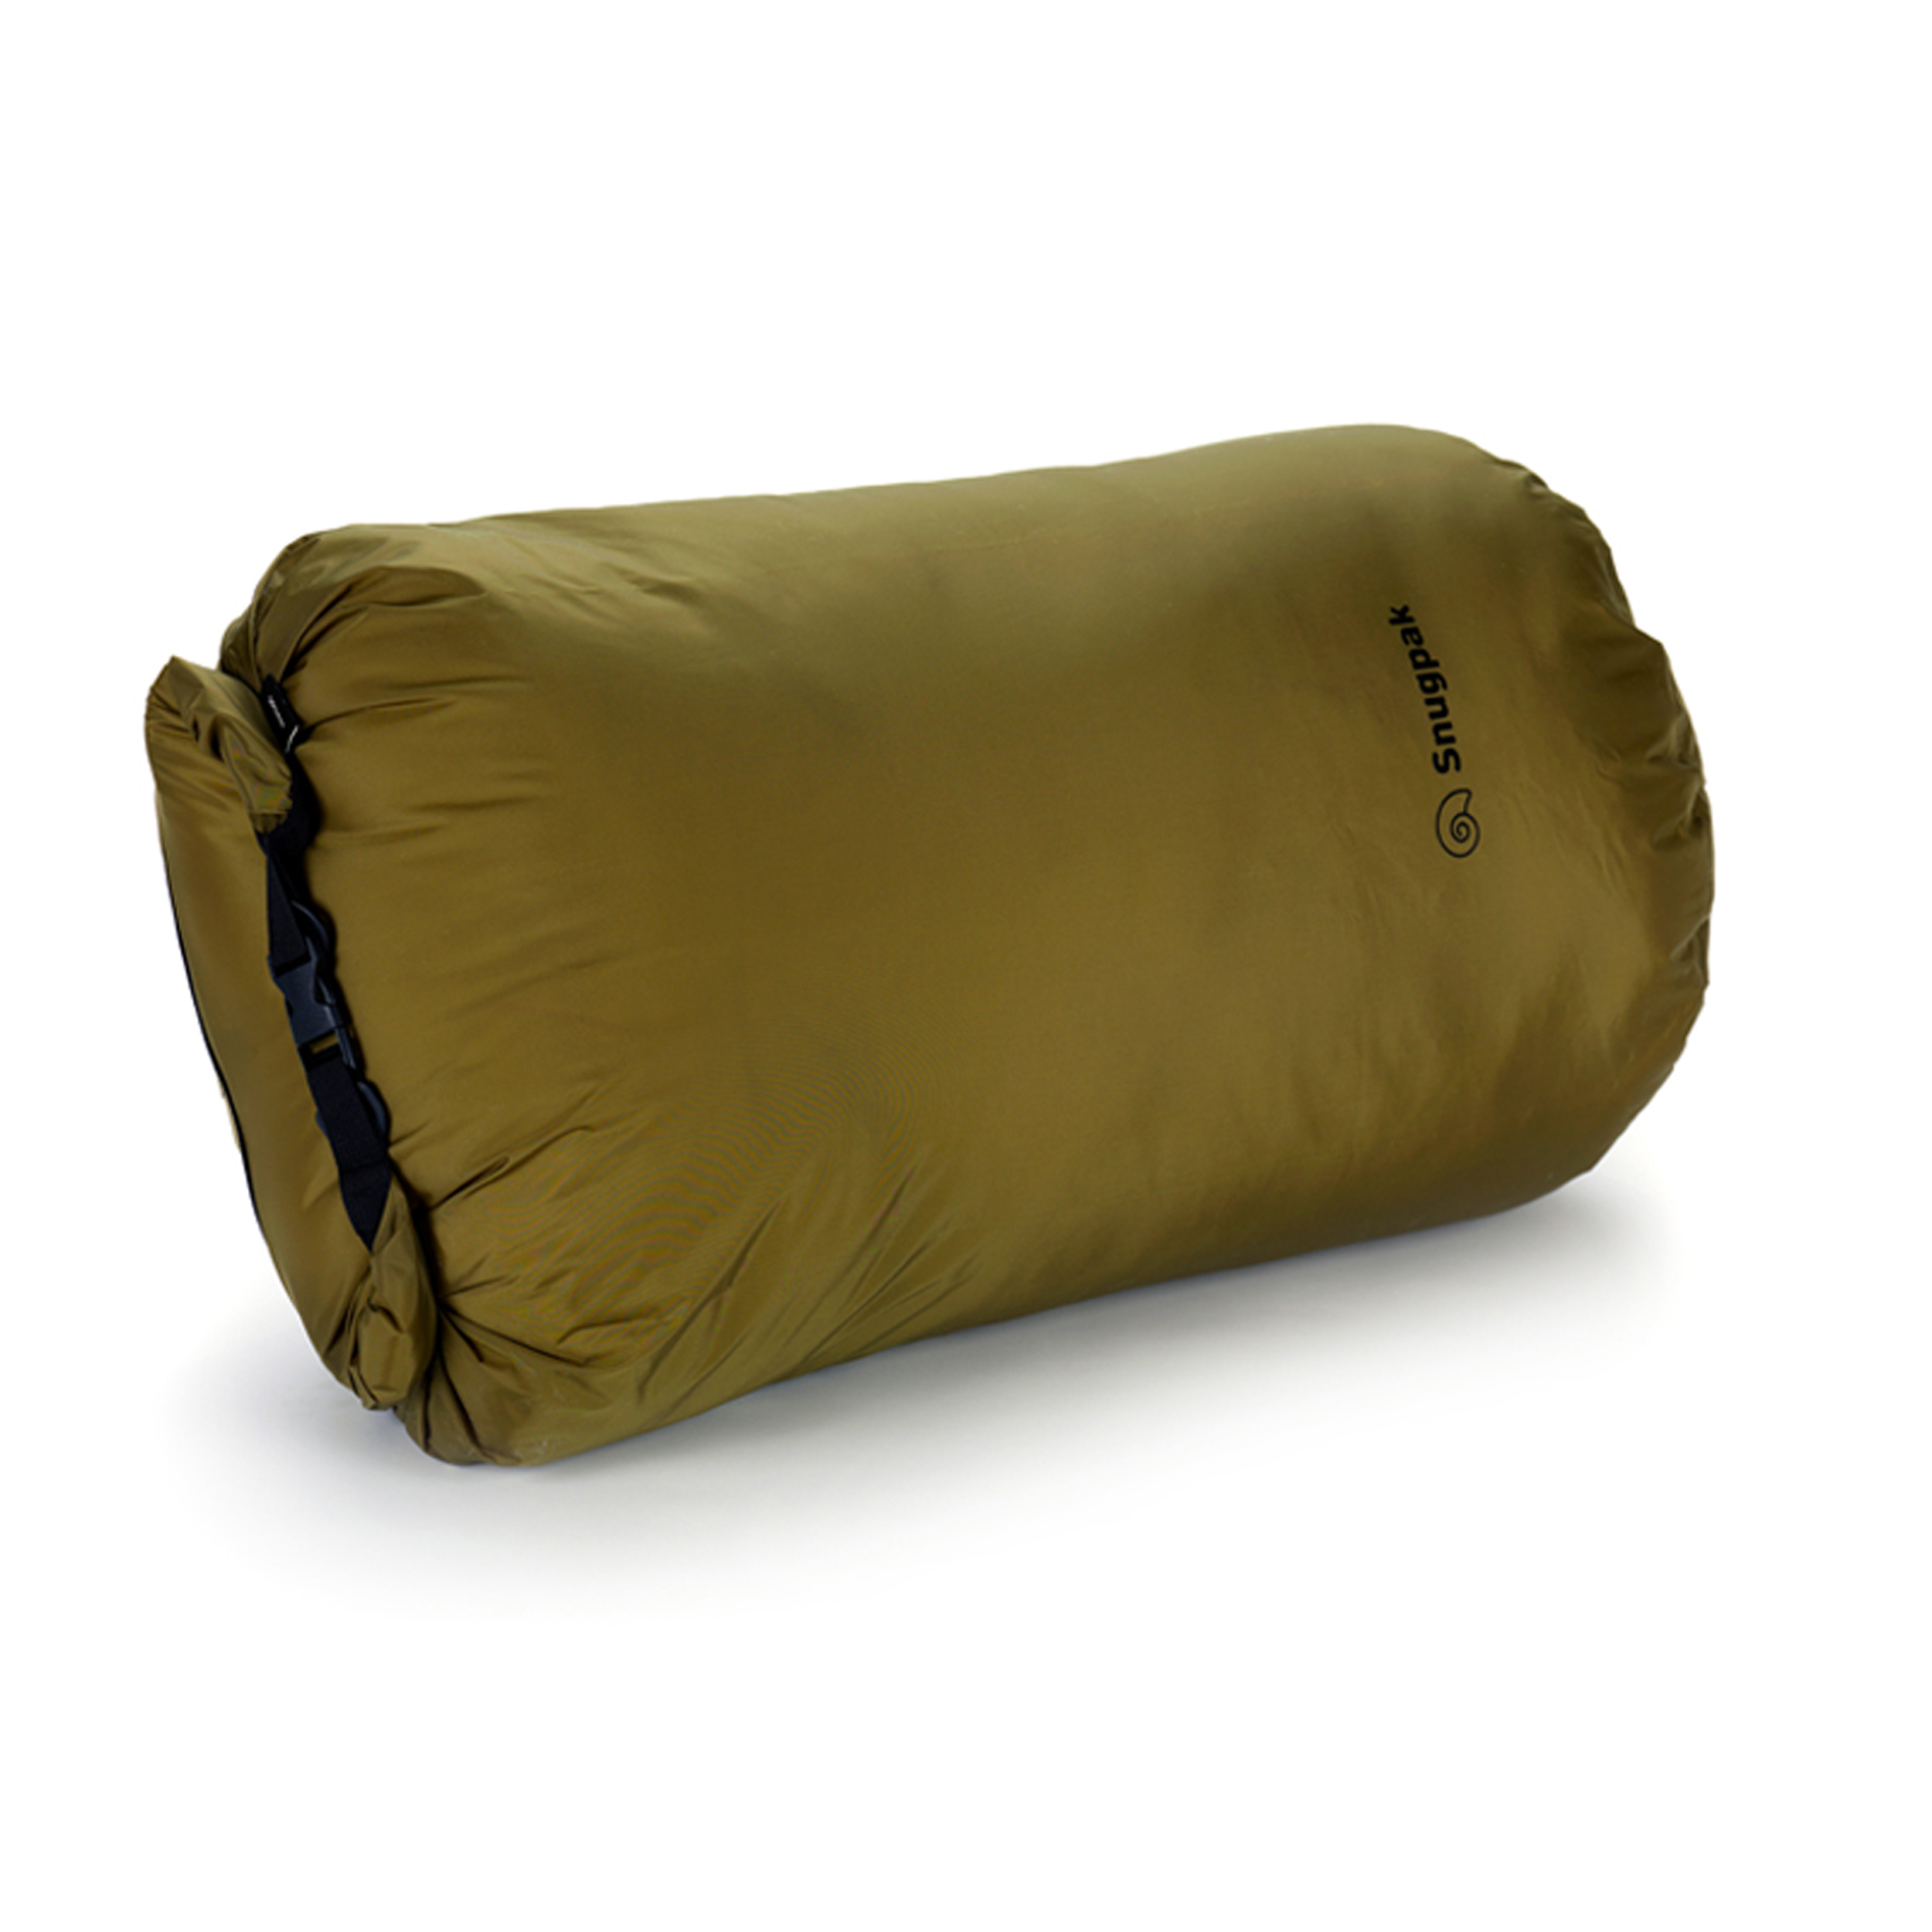 SnugPak Sleeping Bag Compression Sacks - image 2 of 6